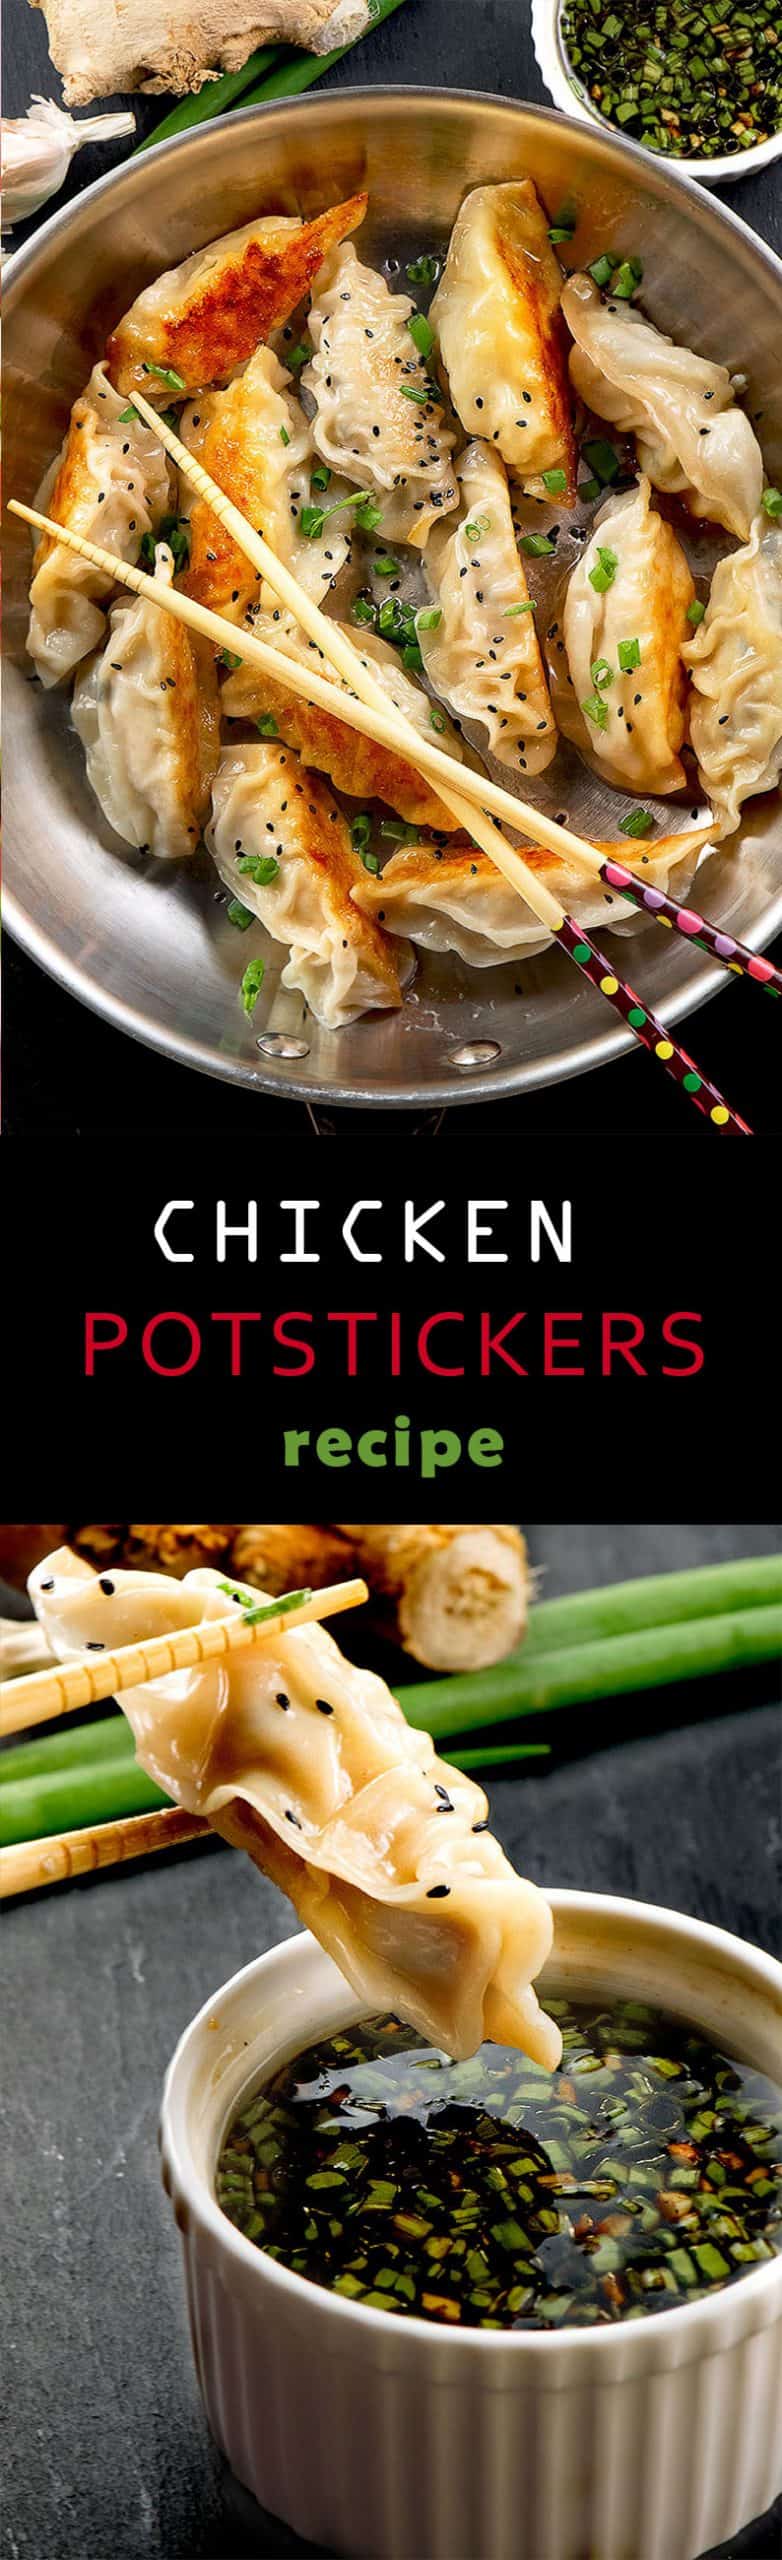 chicken-potstickers